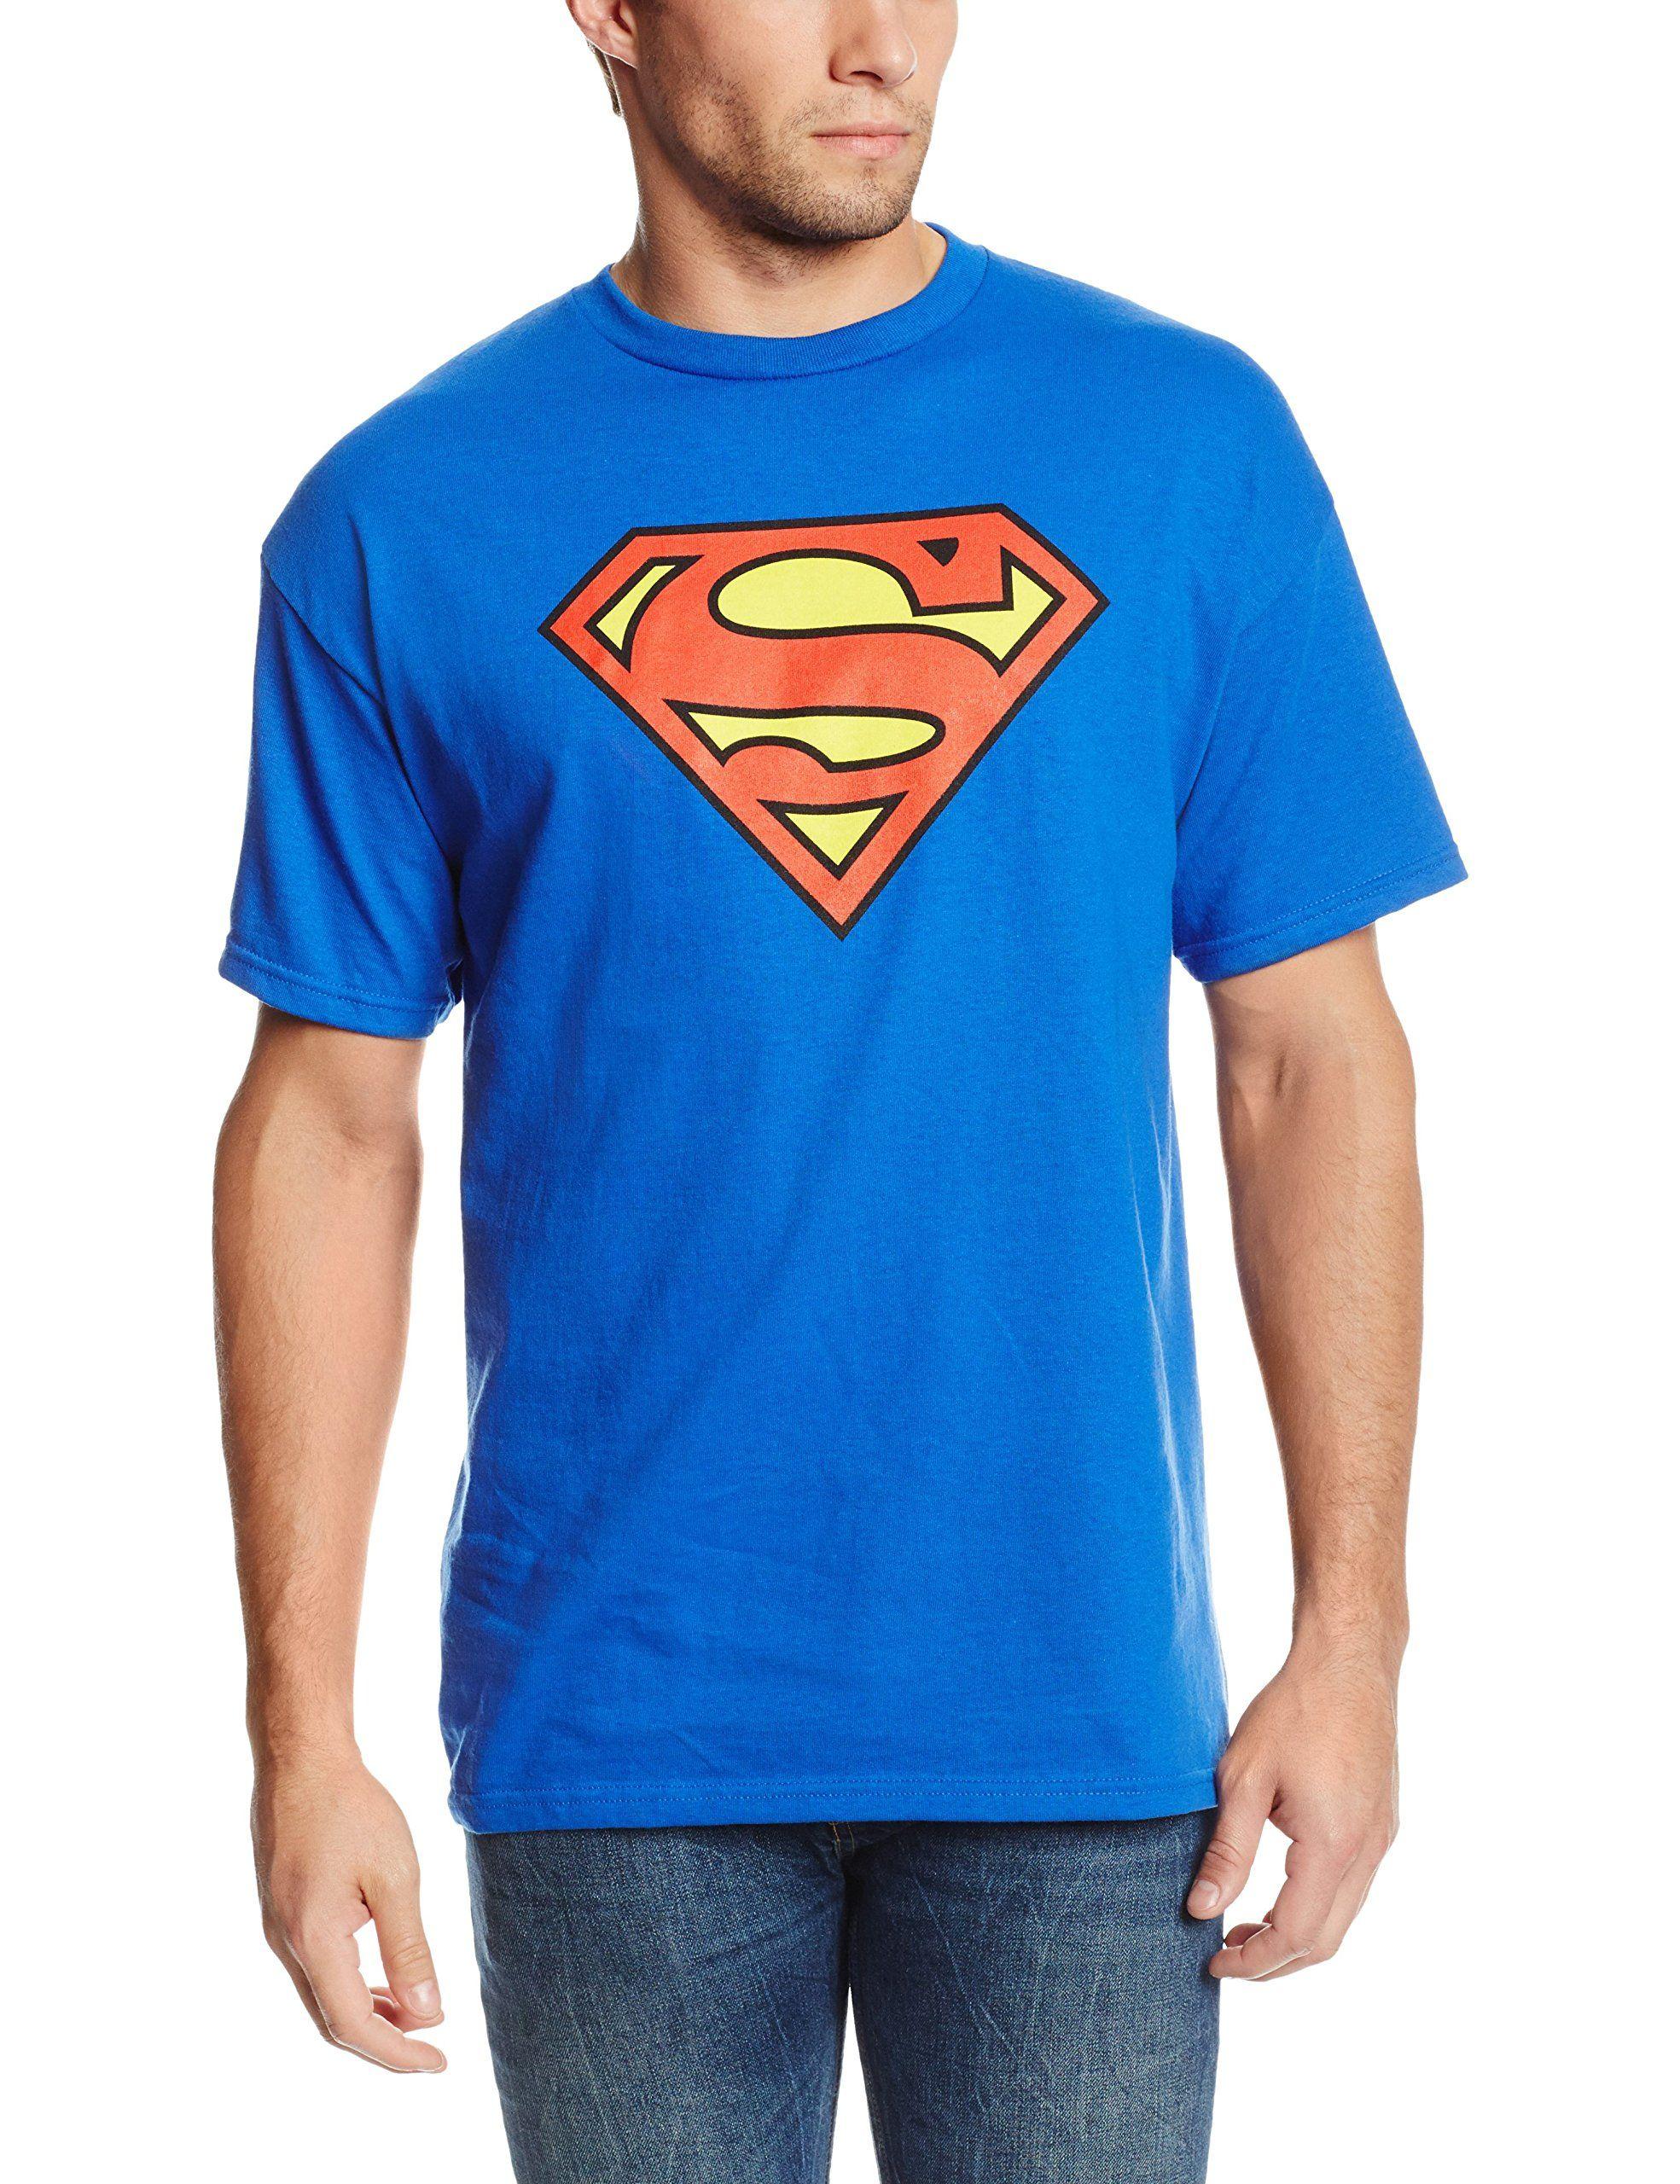 Forest Green Superman Logo - Buy WYMY Men&;s T Shirt Superhero Superman Blue Logo ForestGreen